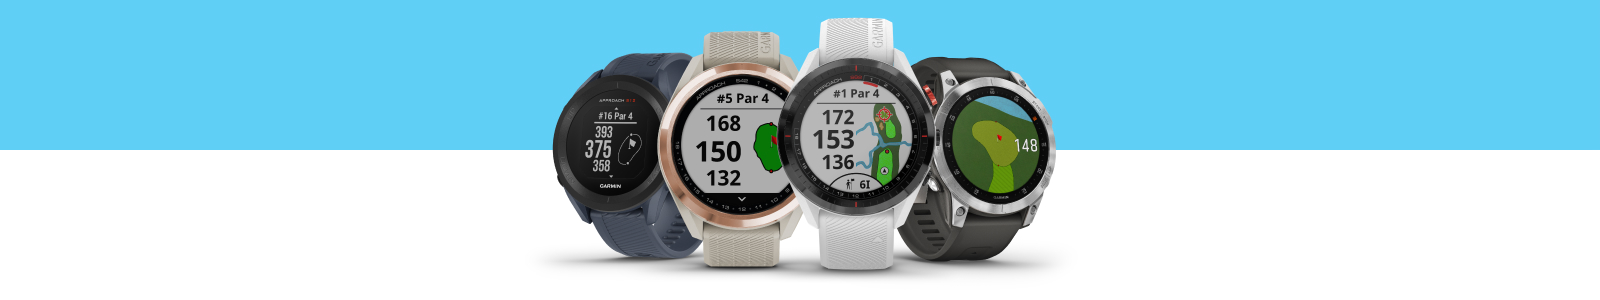 Golf Watch Comparison | Garmin